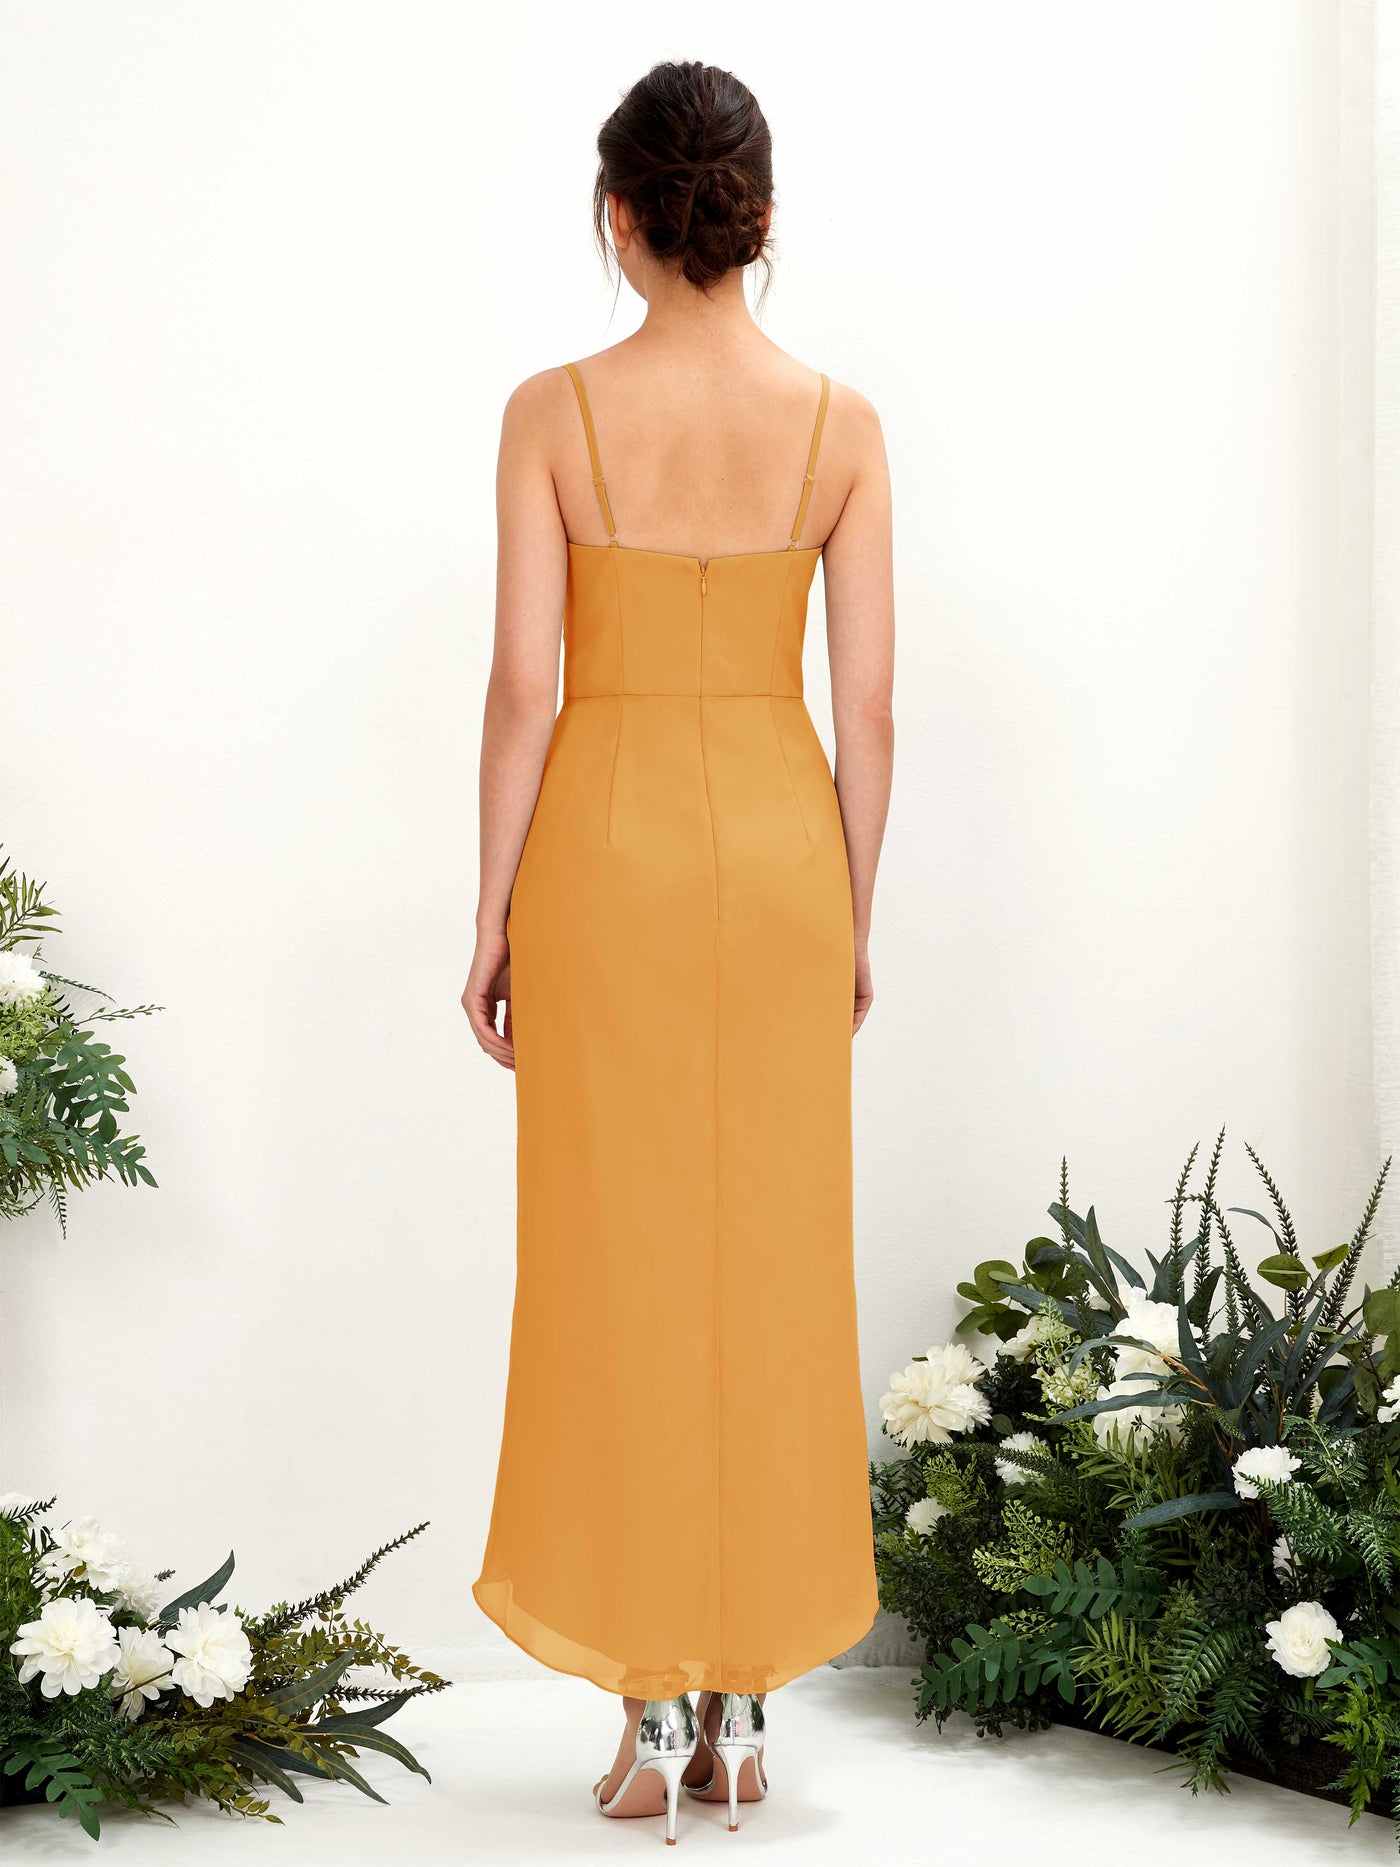 Mango Bridesmaid Dresses Bridesmaid Dress Chiffon Spaghetti-straps Tea Length Sleeveless Wedding Party Dress (81221302)#color_mango